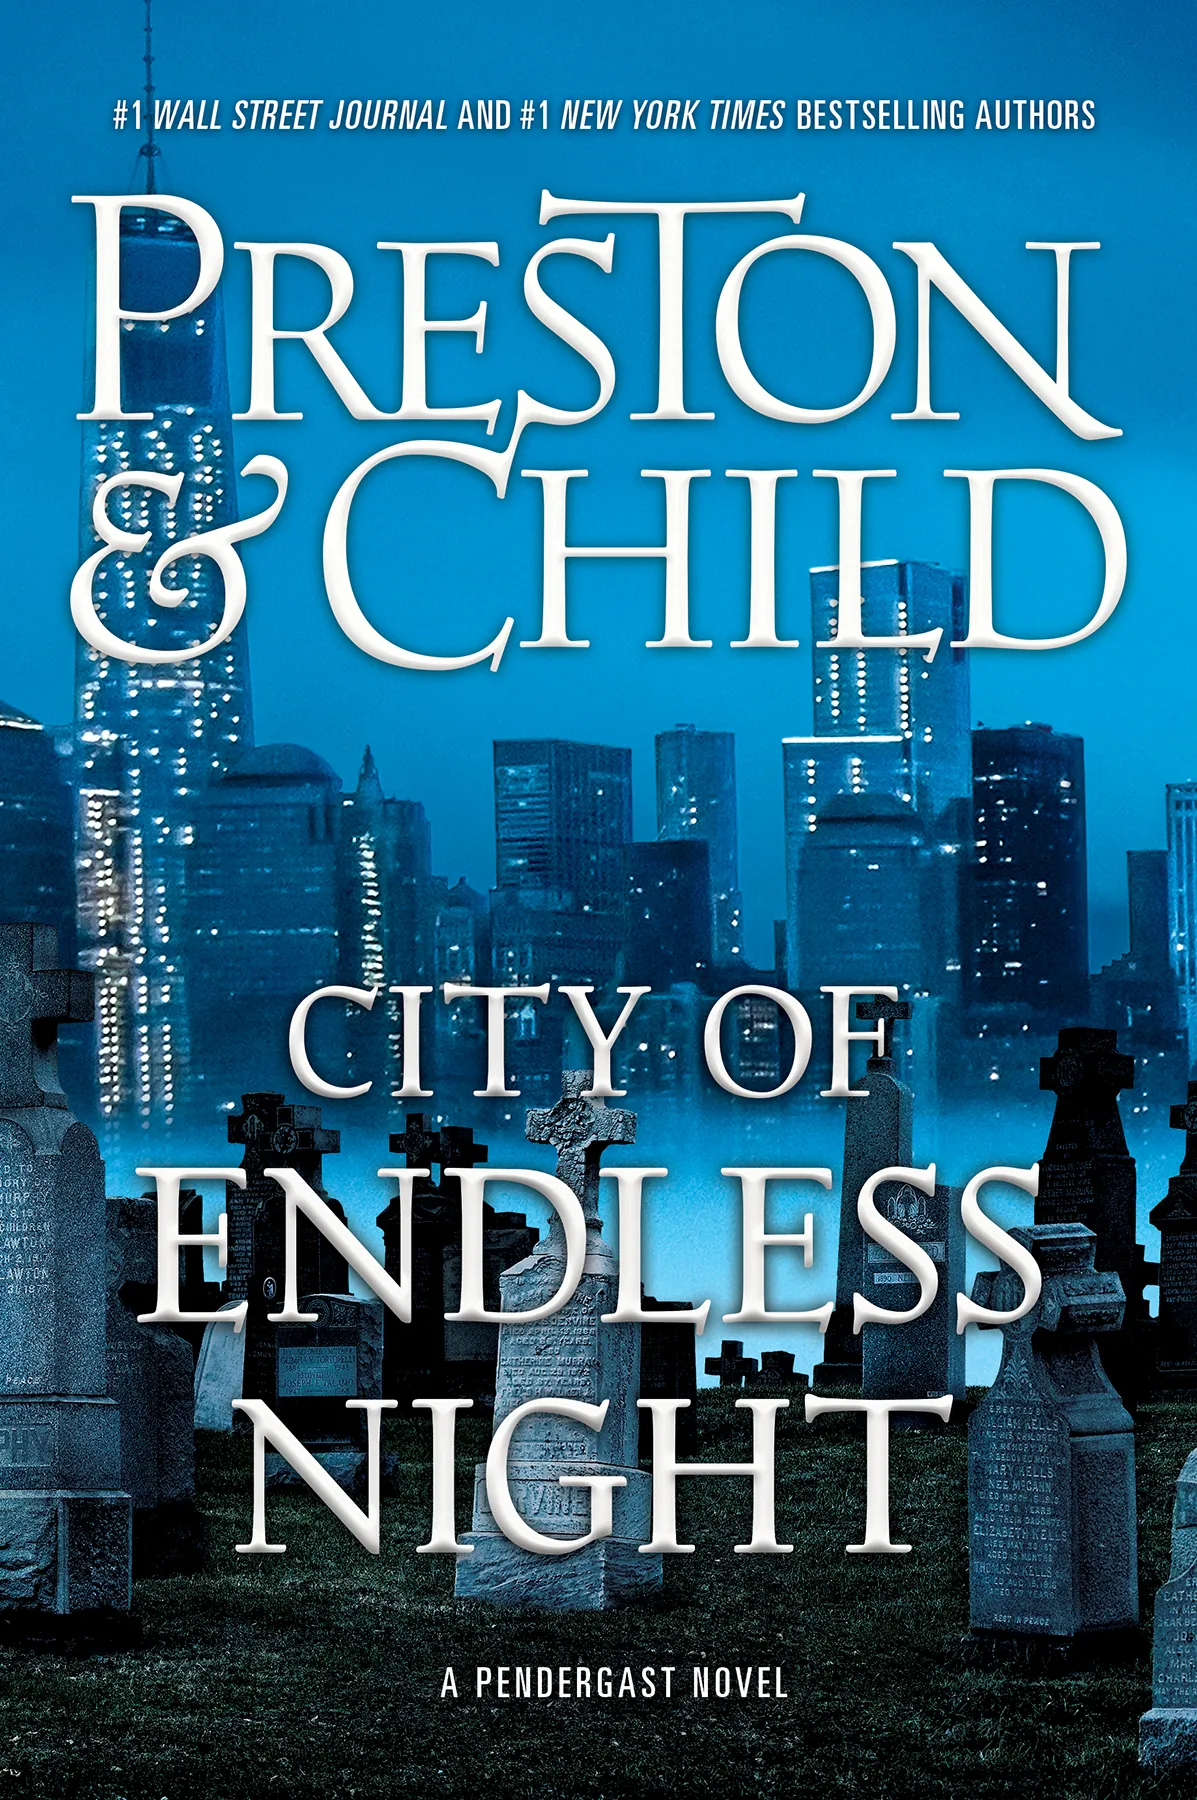 City of Endless Night (Agent Pendergast #17)